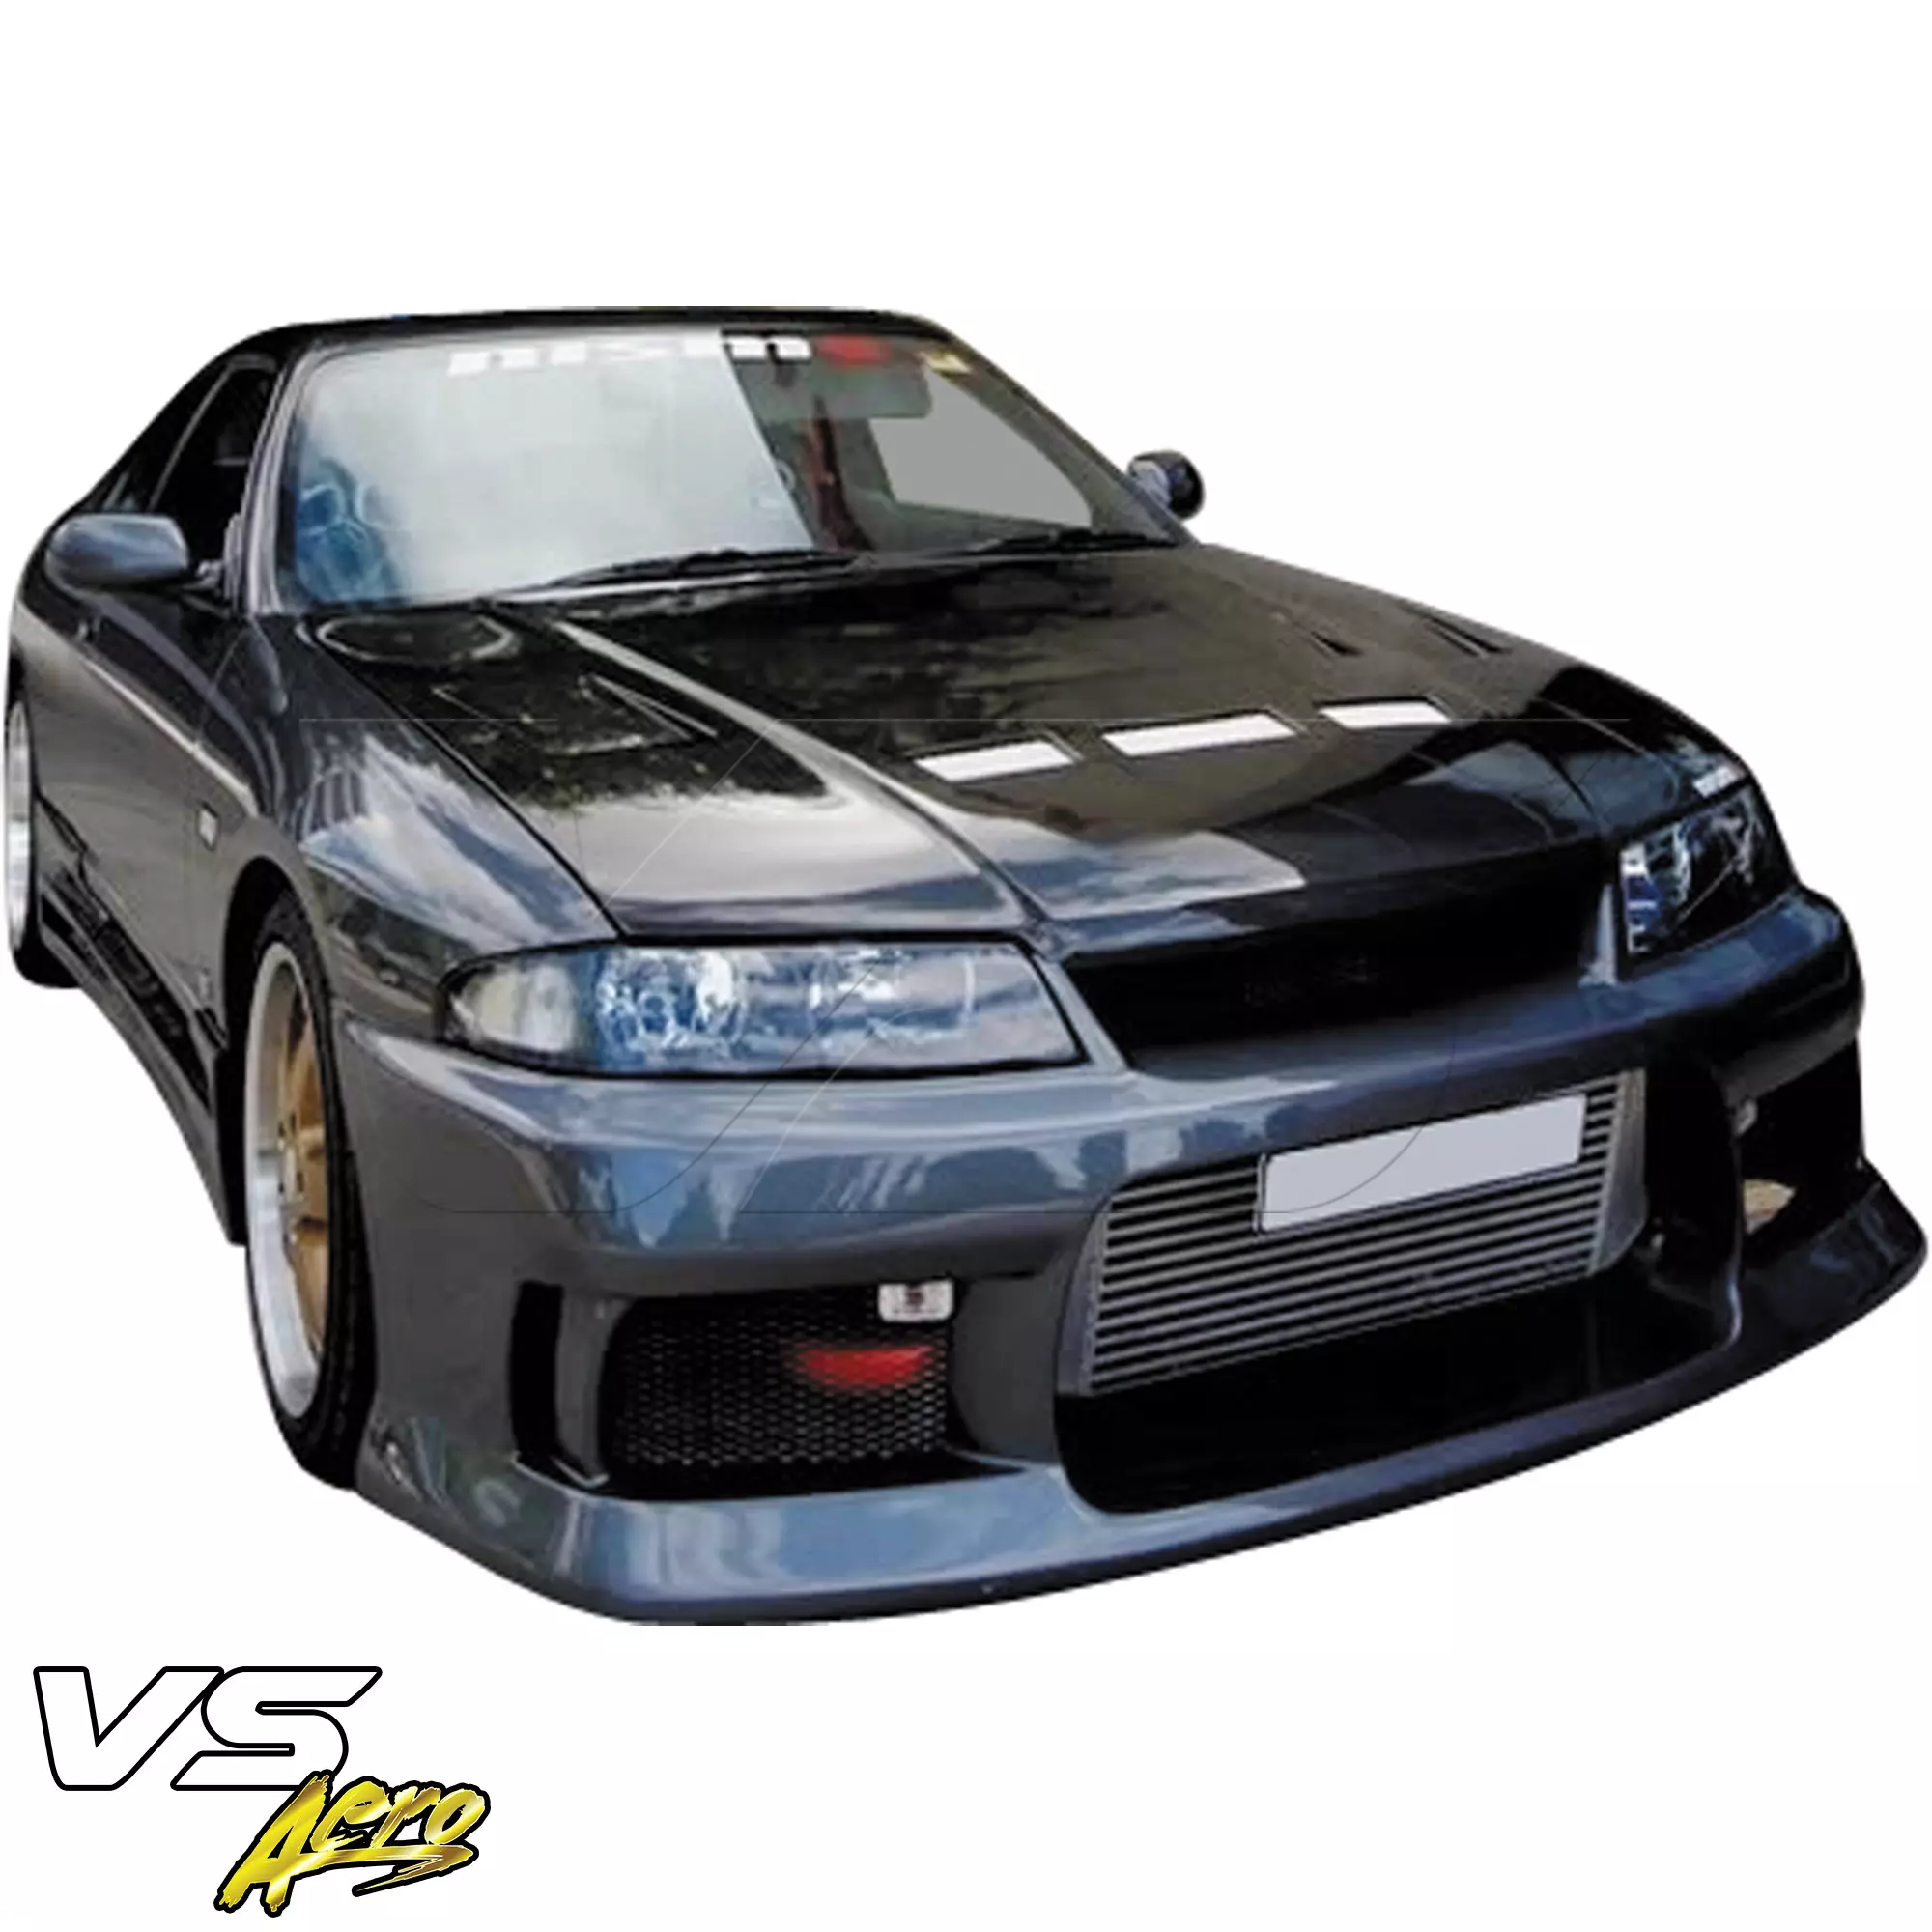 VSaero FRP MSPO v2 Body Kit 4pc > Nissan Skyline R33 GTS 1995-1998 > 2dr Coupe - Image 8